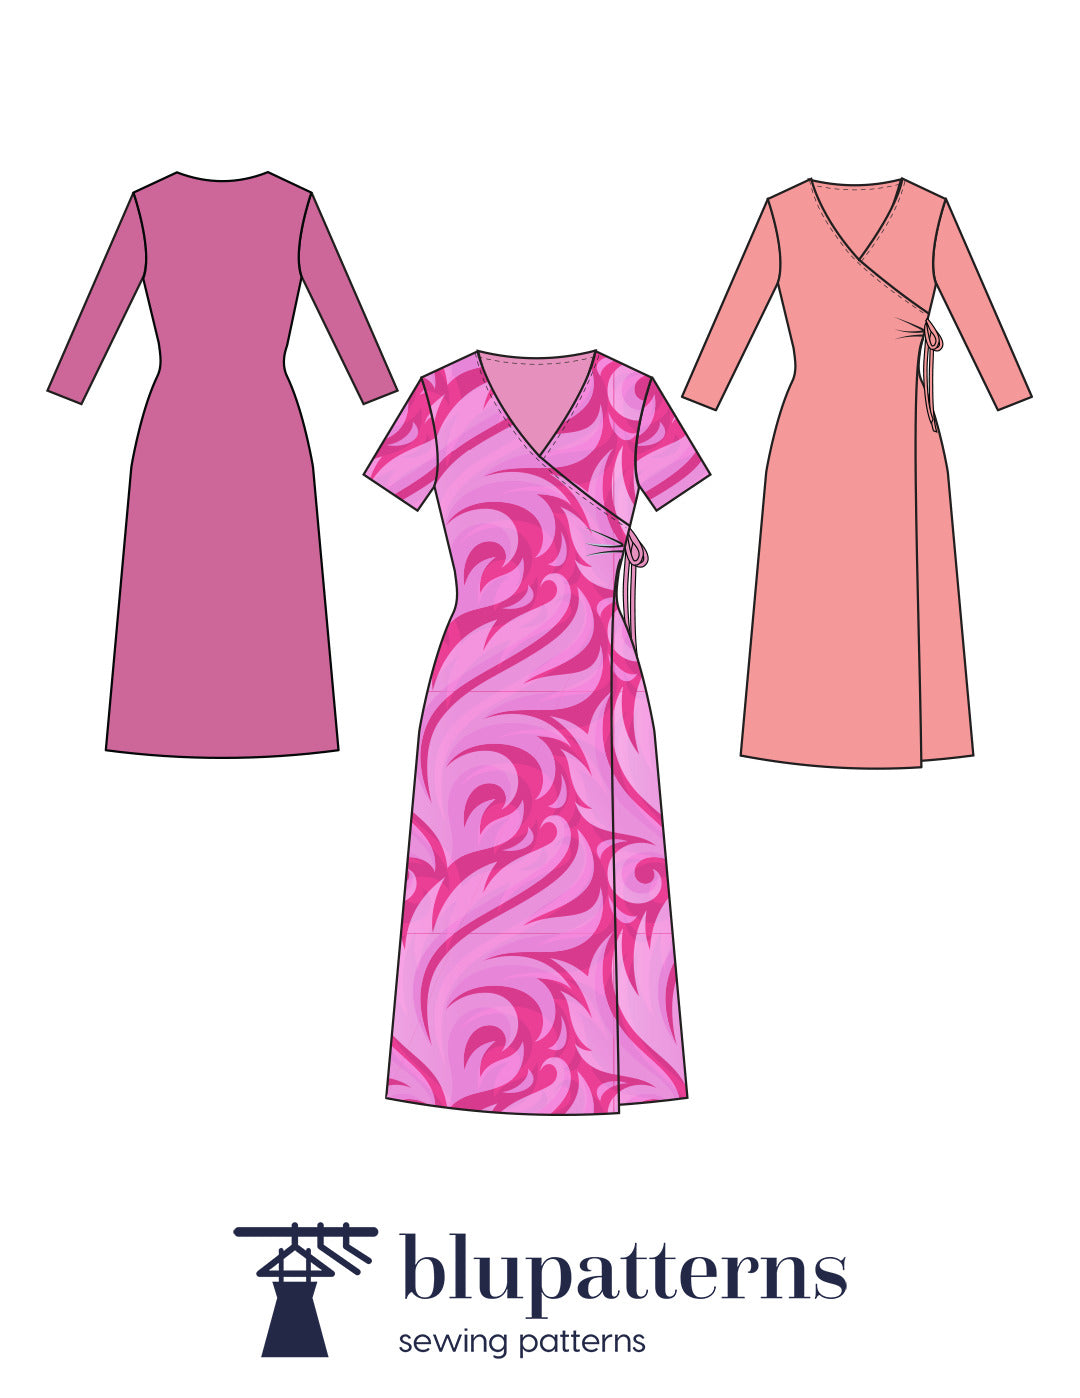 Lyanna Wrap Dress Pattern